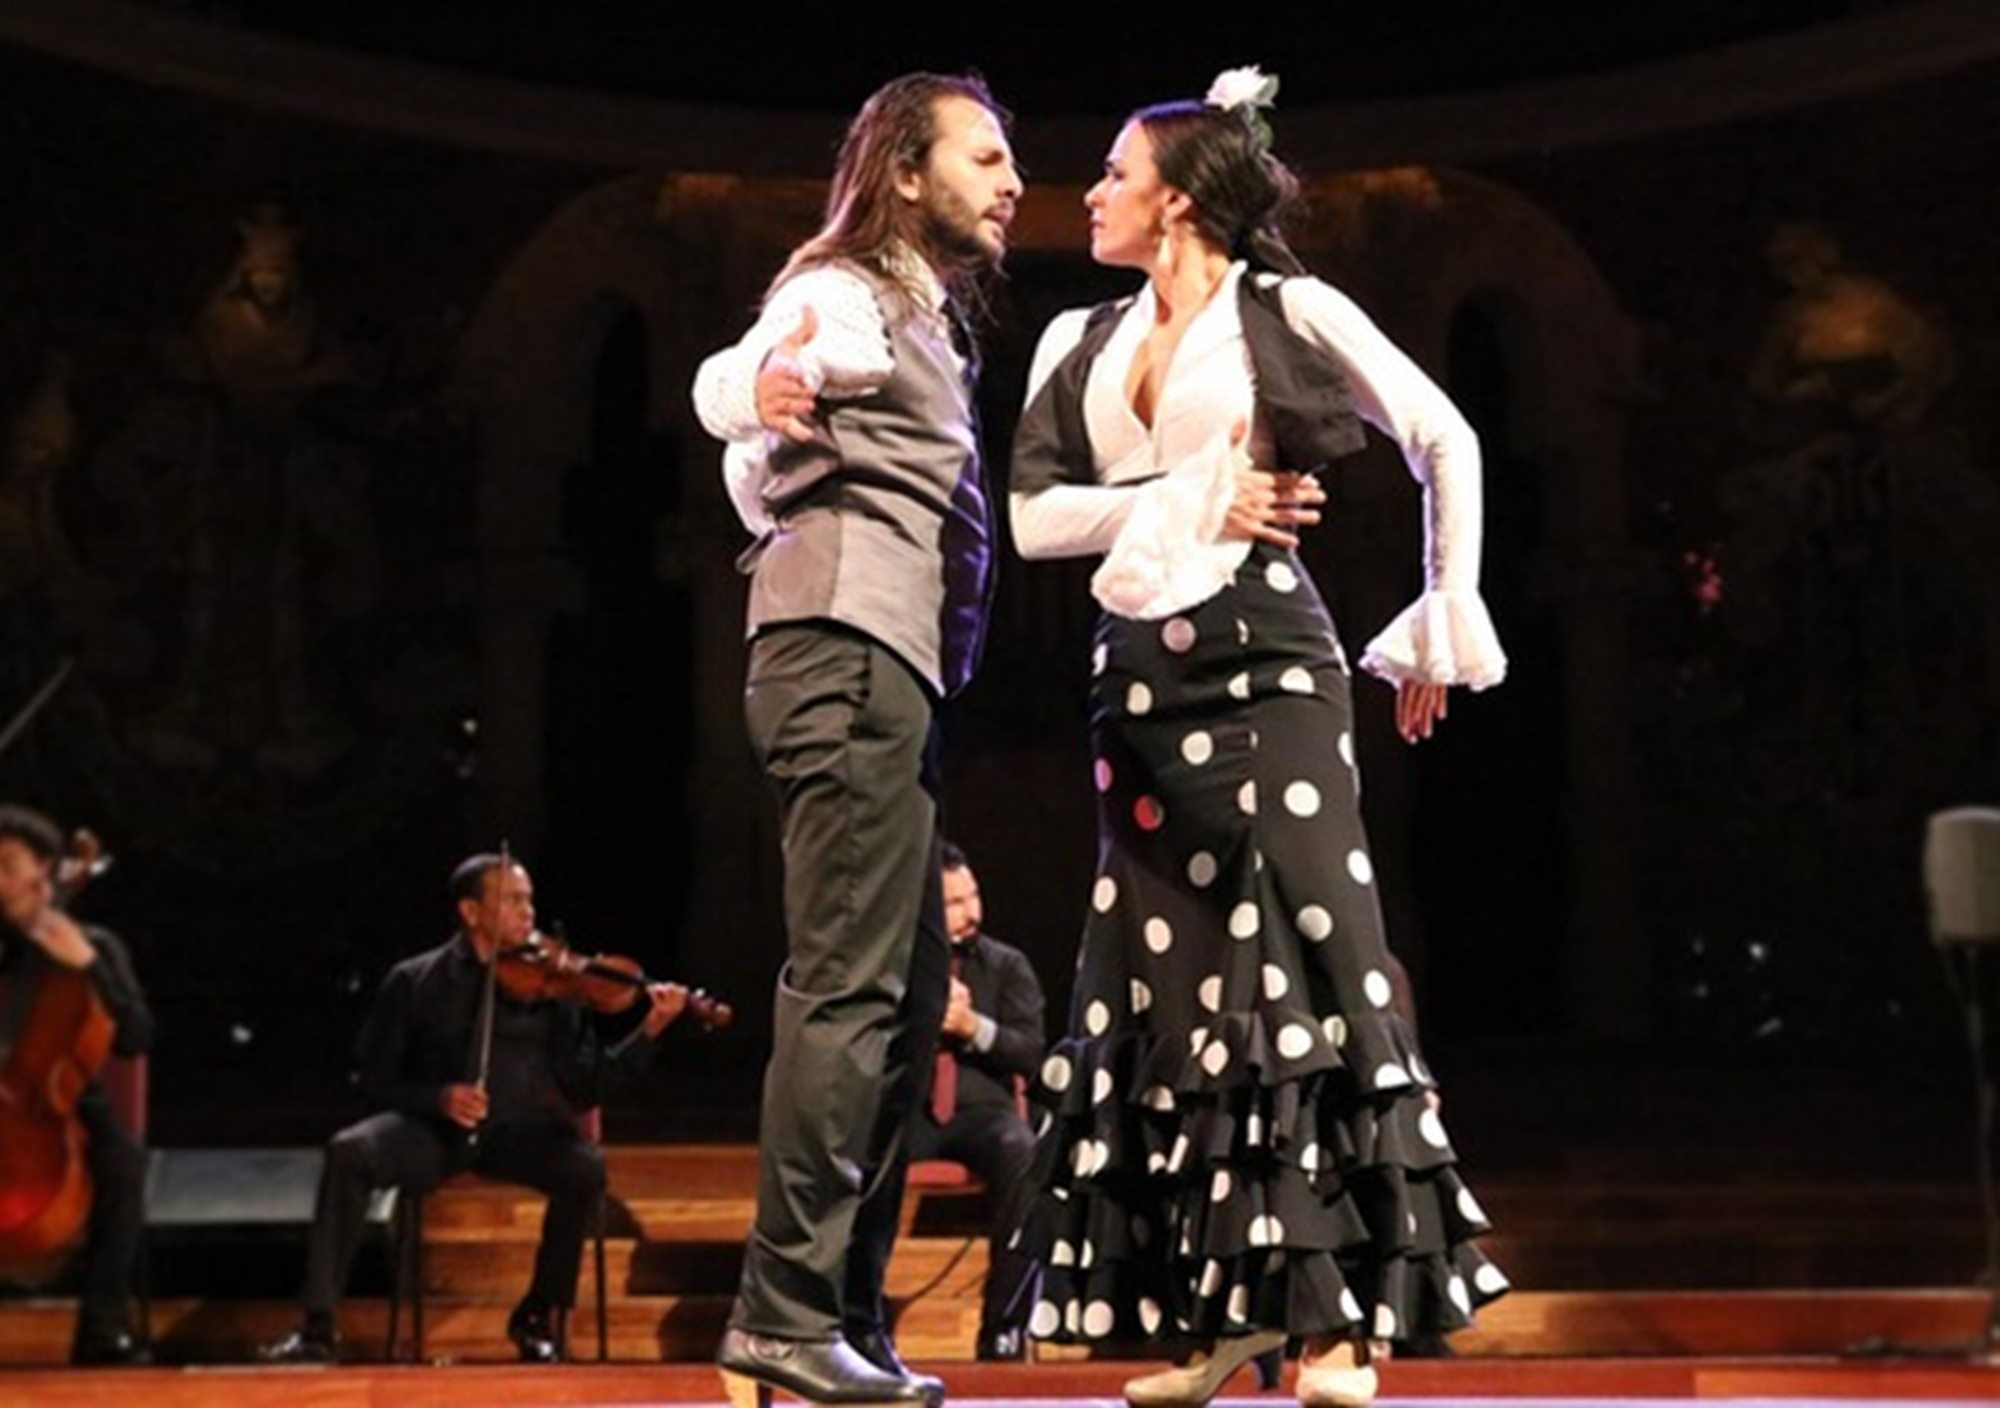 reservieren kaufen buchung tickets besucht Touren Fahrkarte karte karten Eintrittskarten Oper Flamenco show Palau barcelona